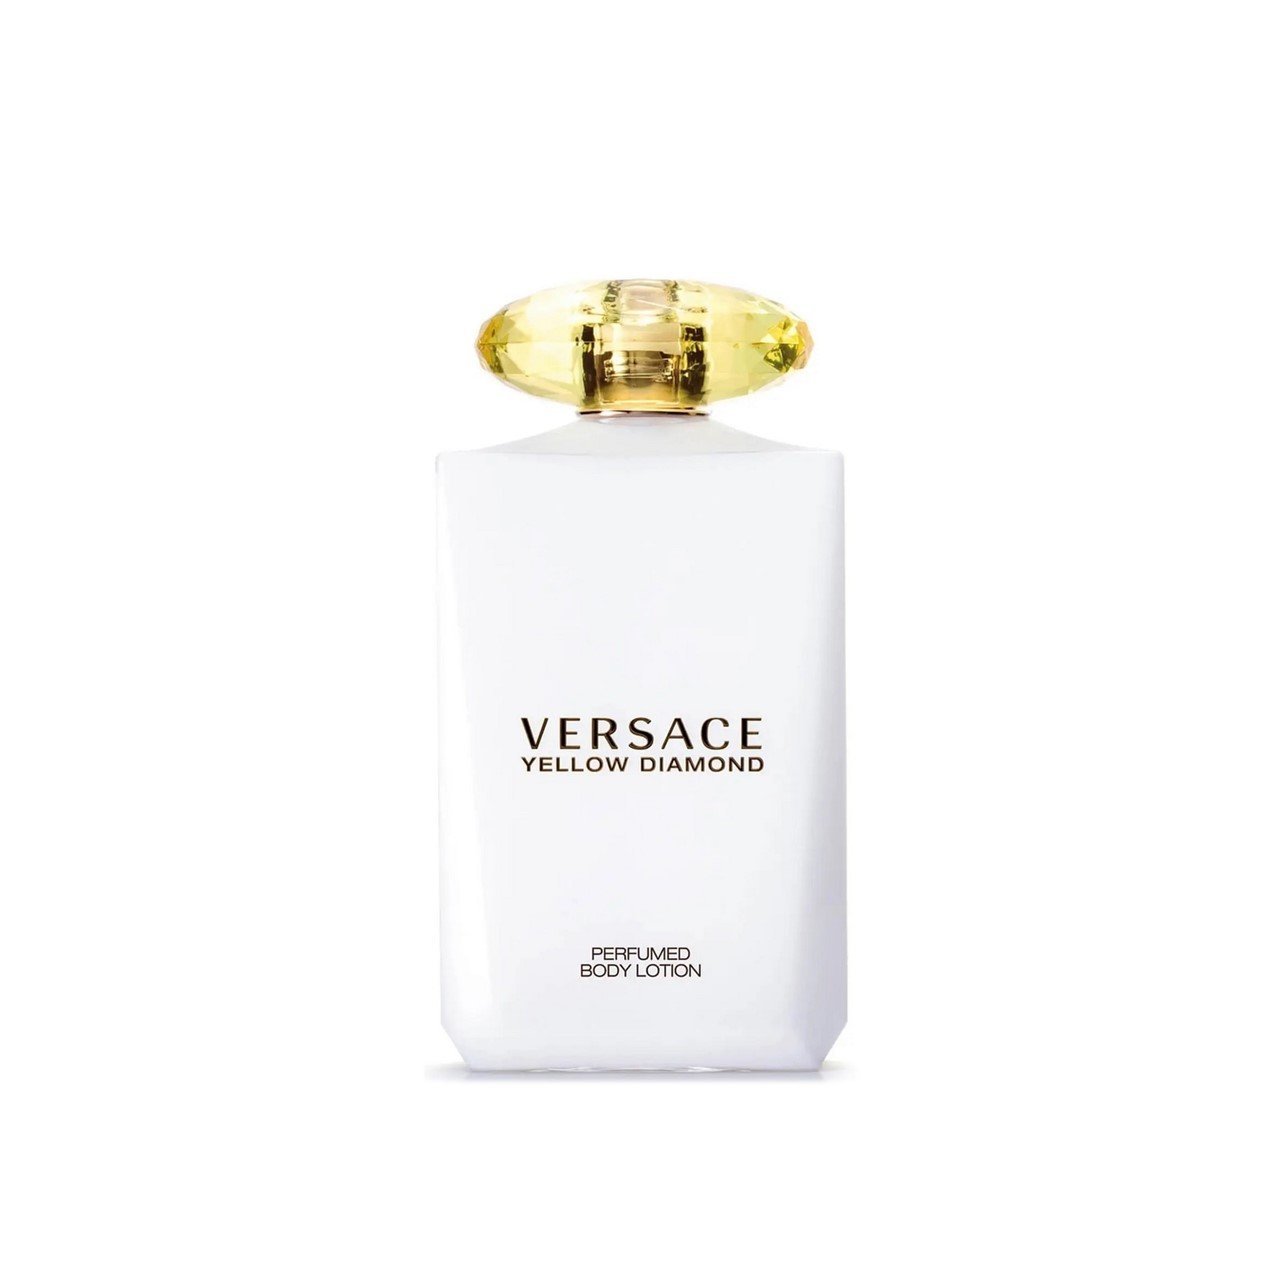 Versace Yellow Diamond Perfumed Body Lotion 200ml (6.7 fl oz)